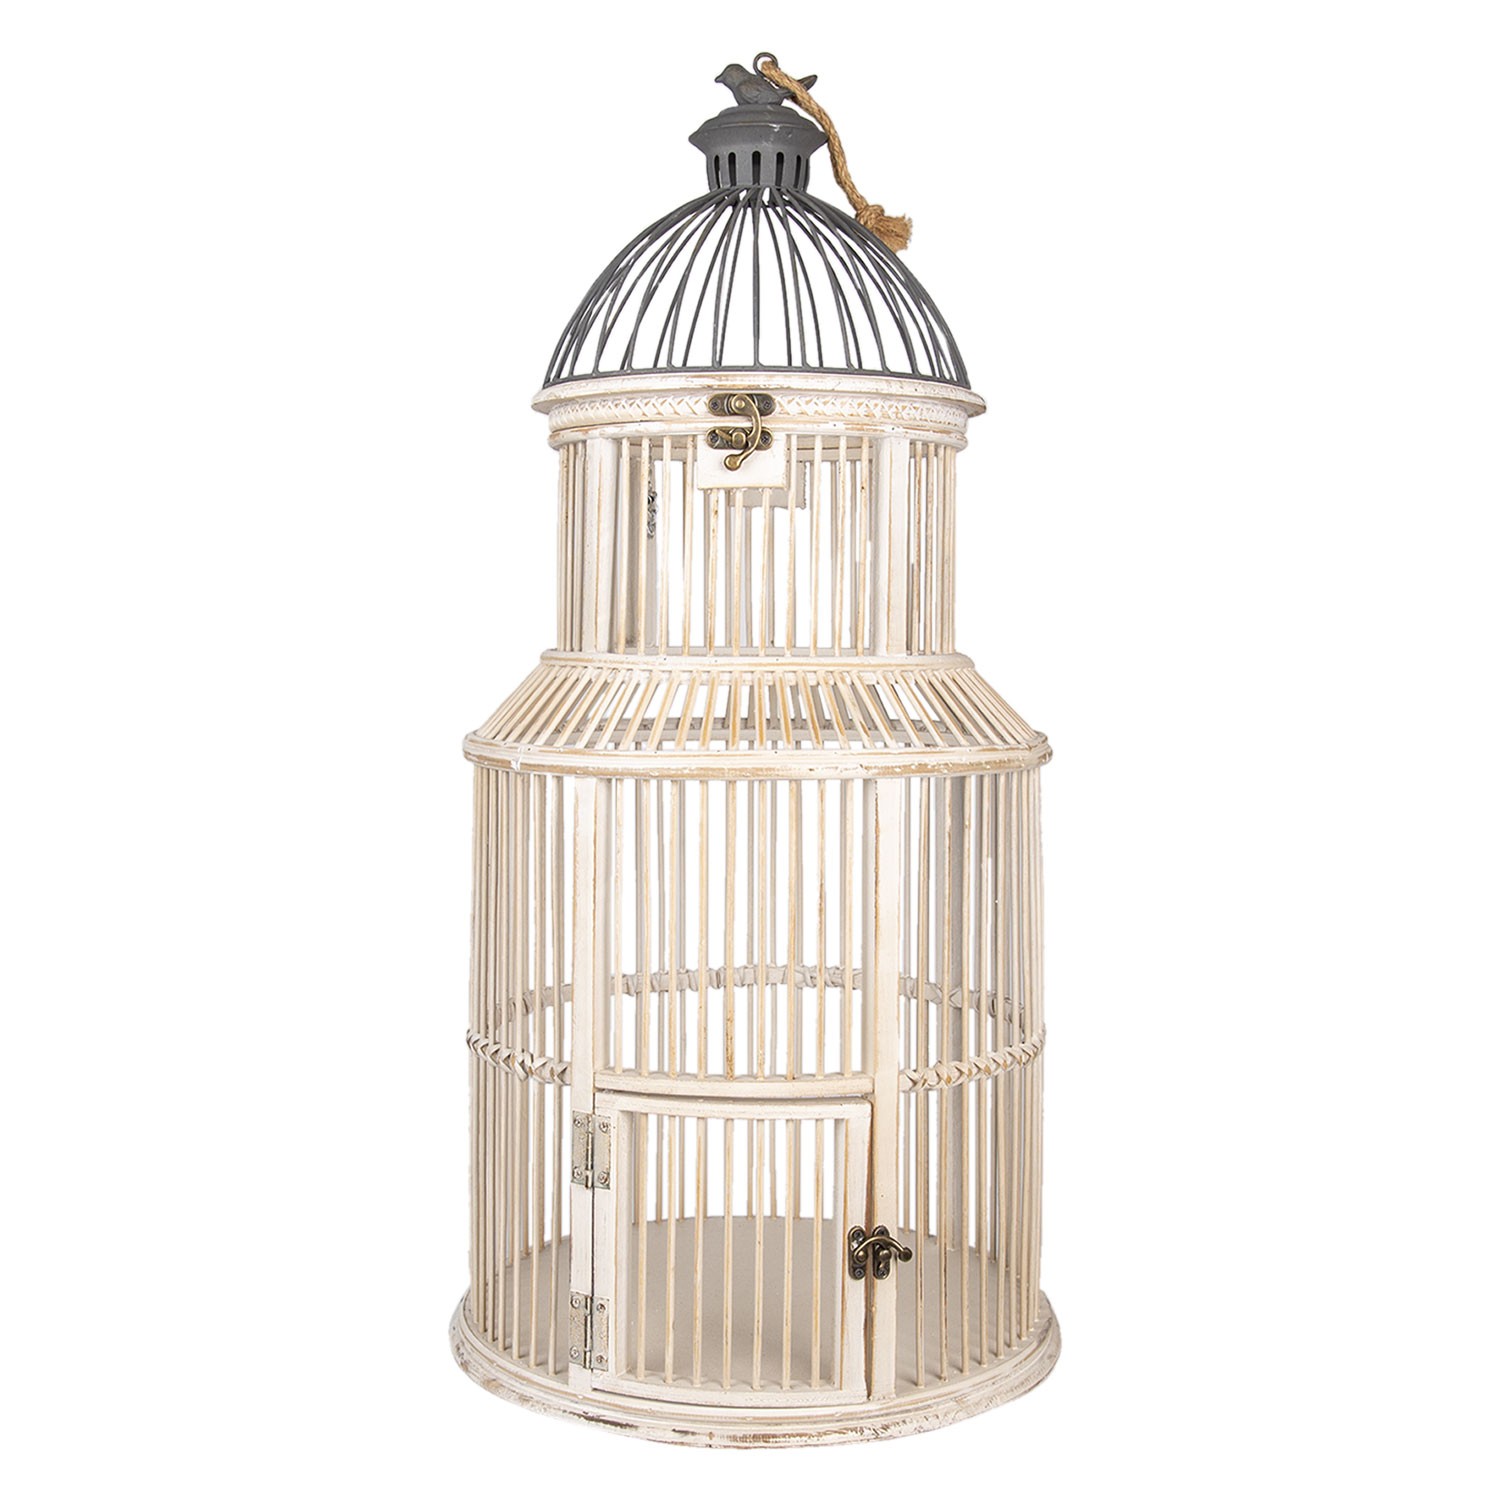 Bílo šedá kovová dekorativní klec s ptáčkem na ptáčky - Ø 36*78 cm 5H0490